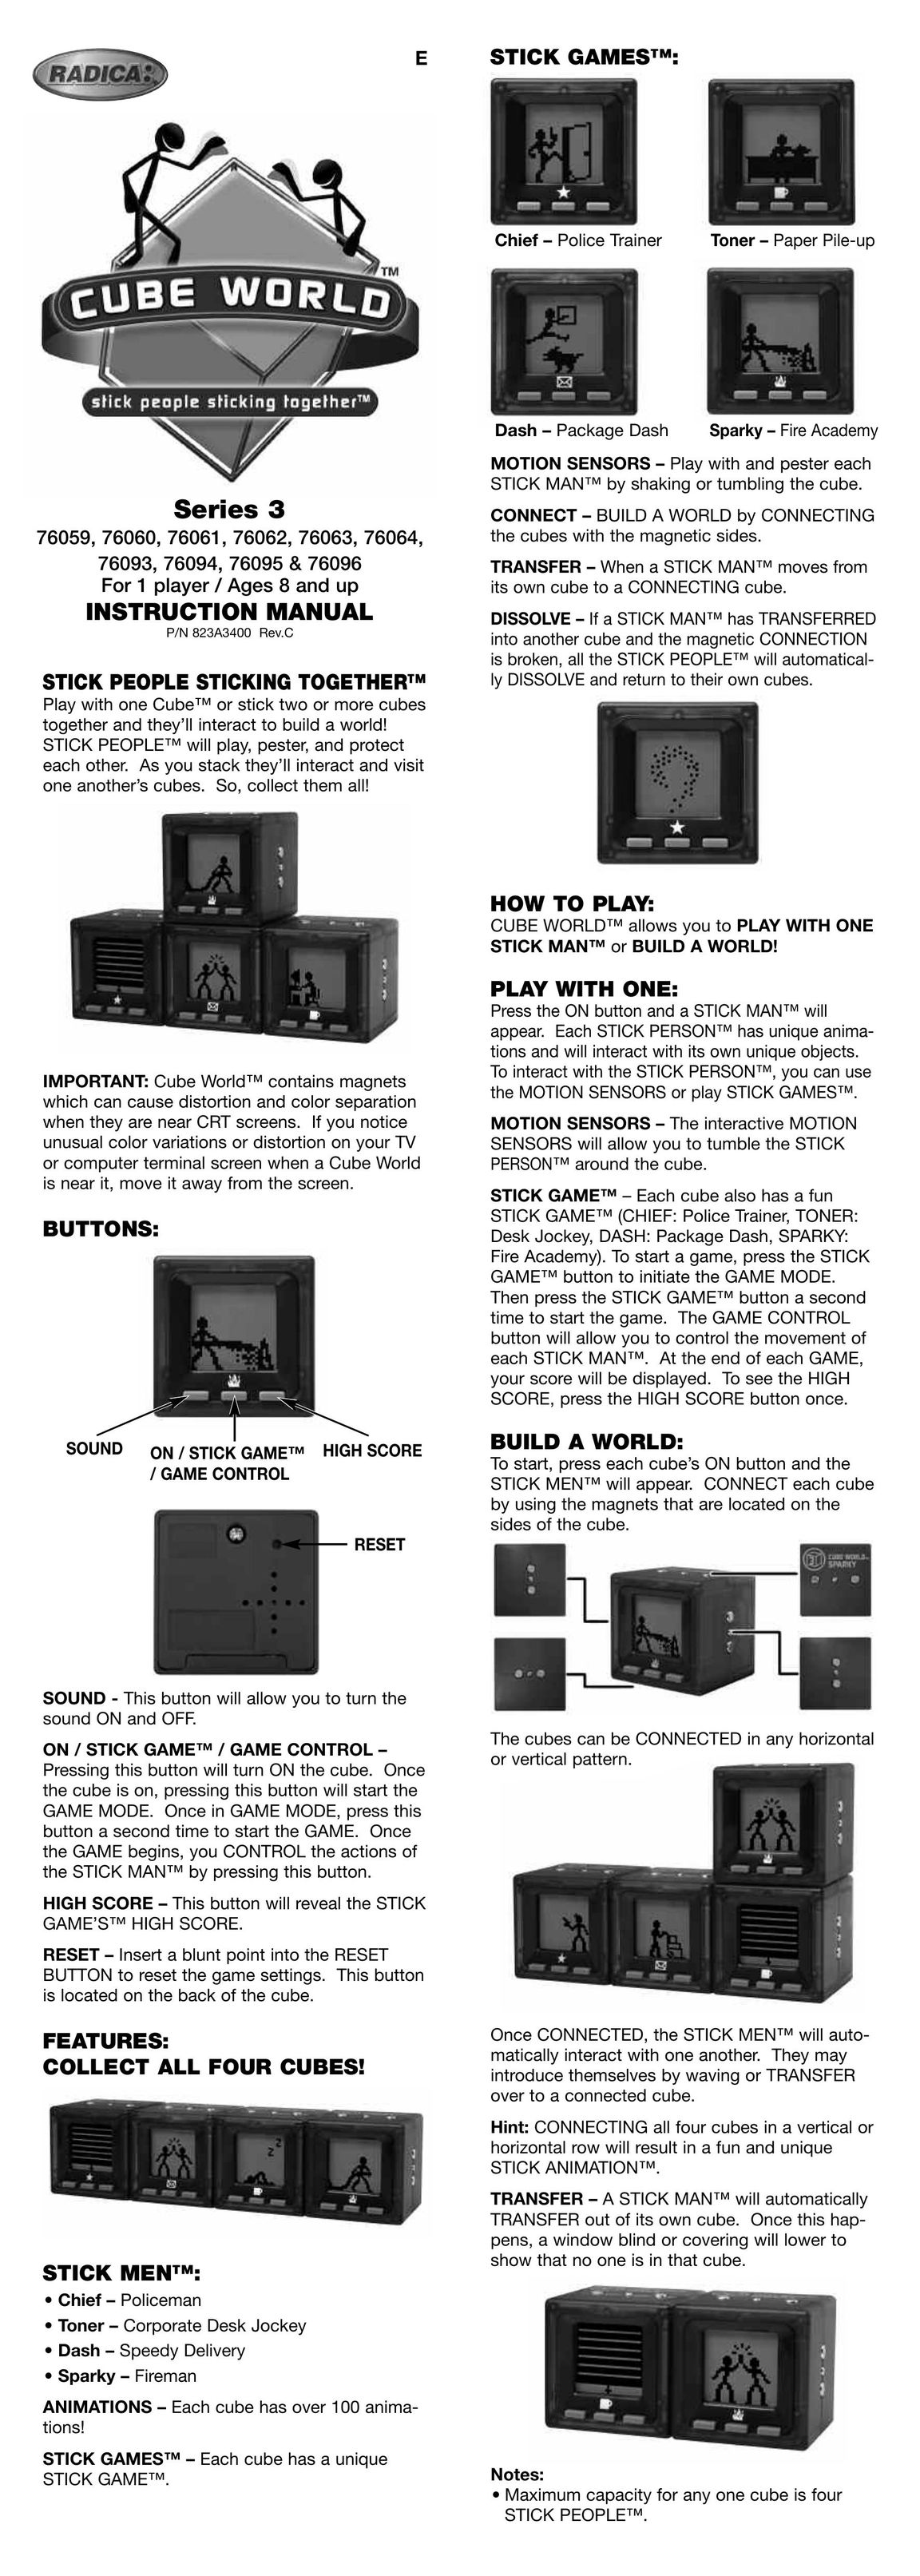 Radica Games 76062 Handheld Game System User Manual